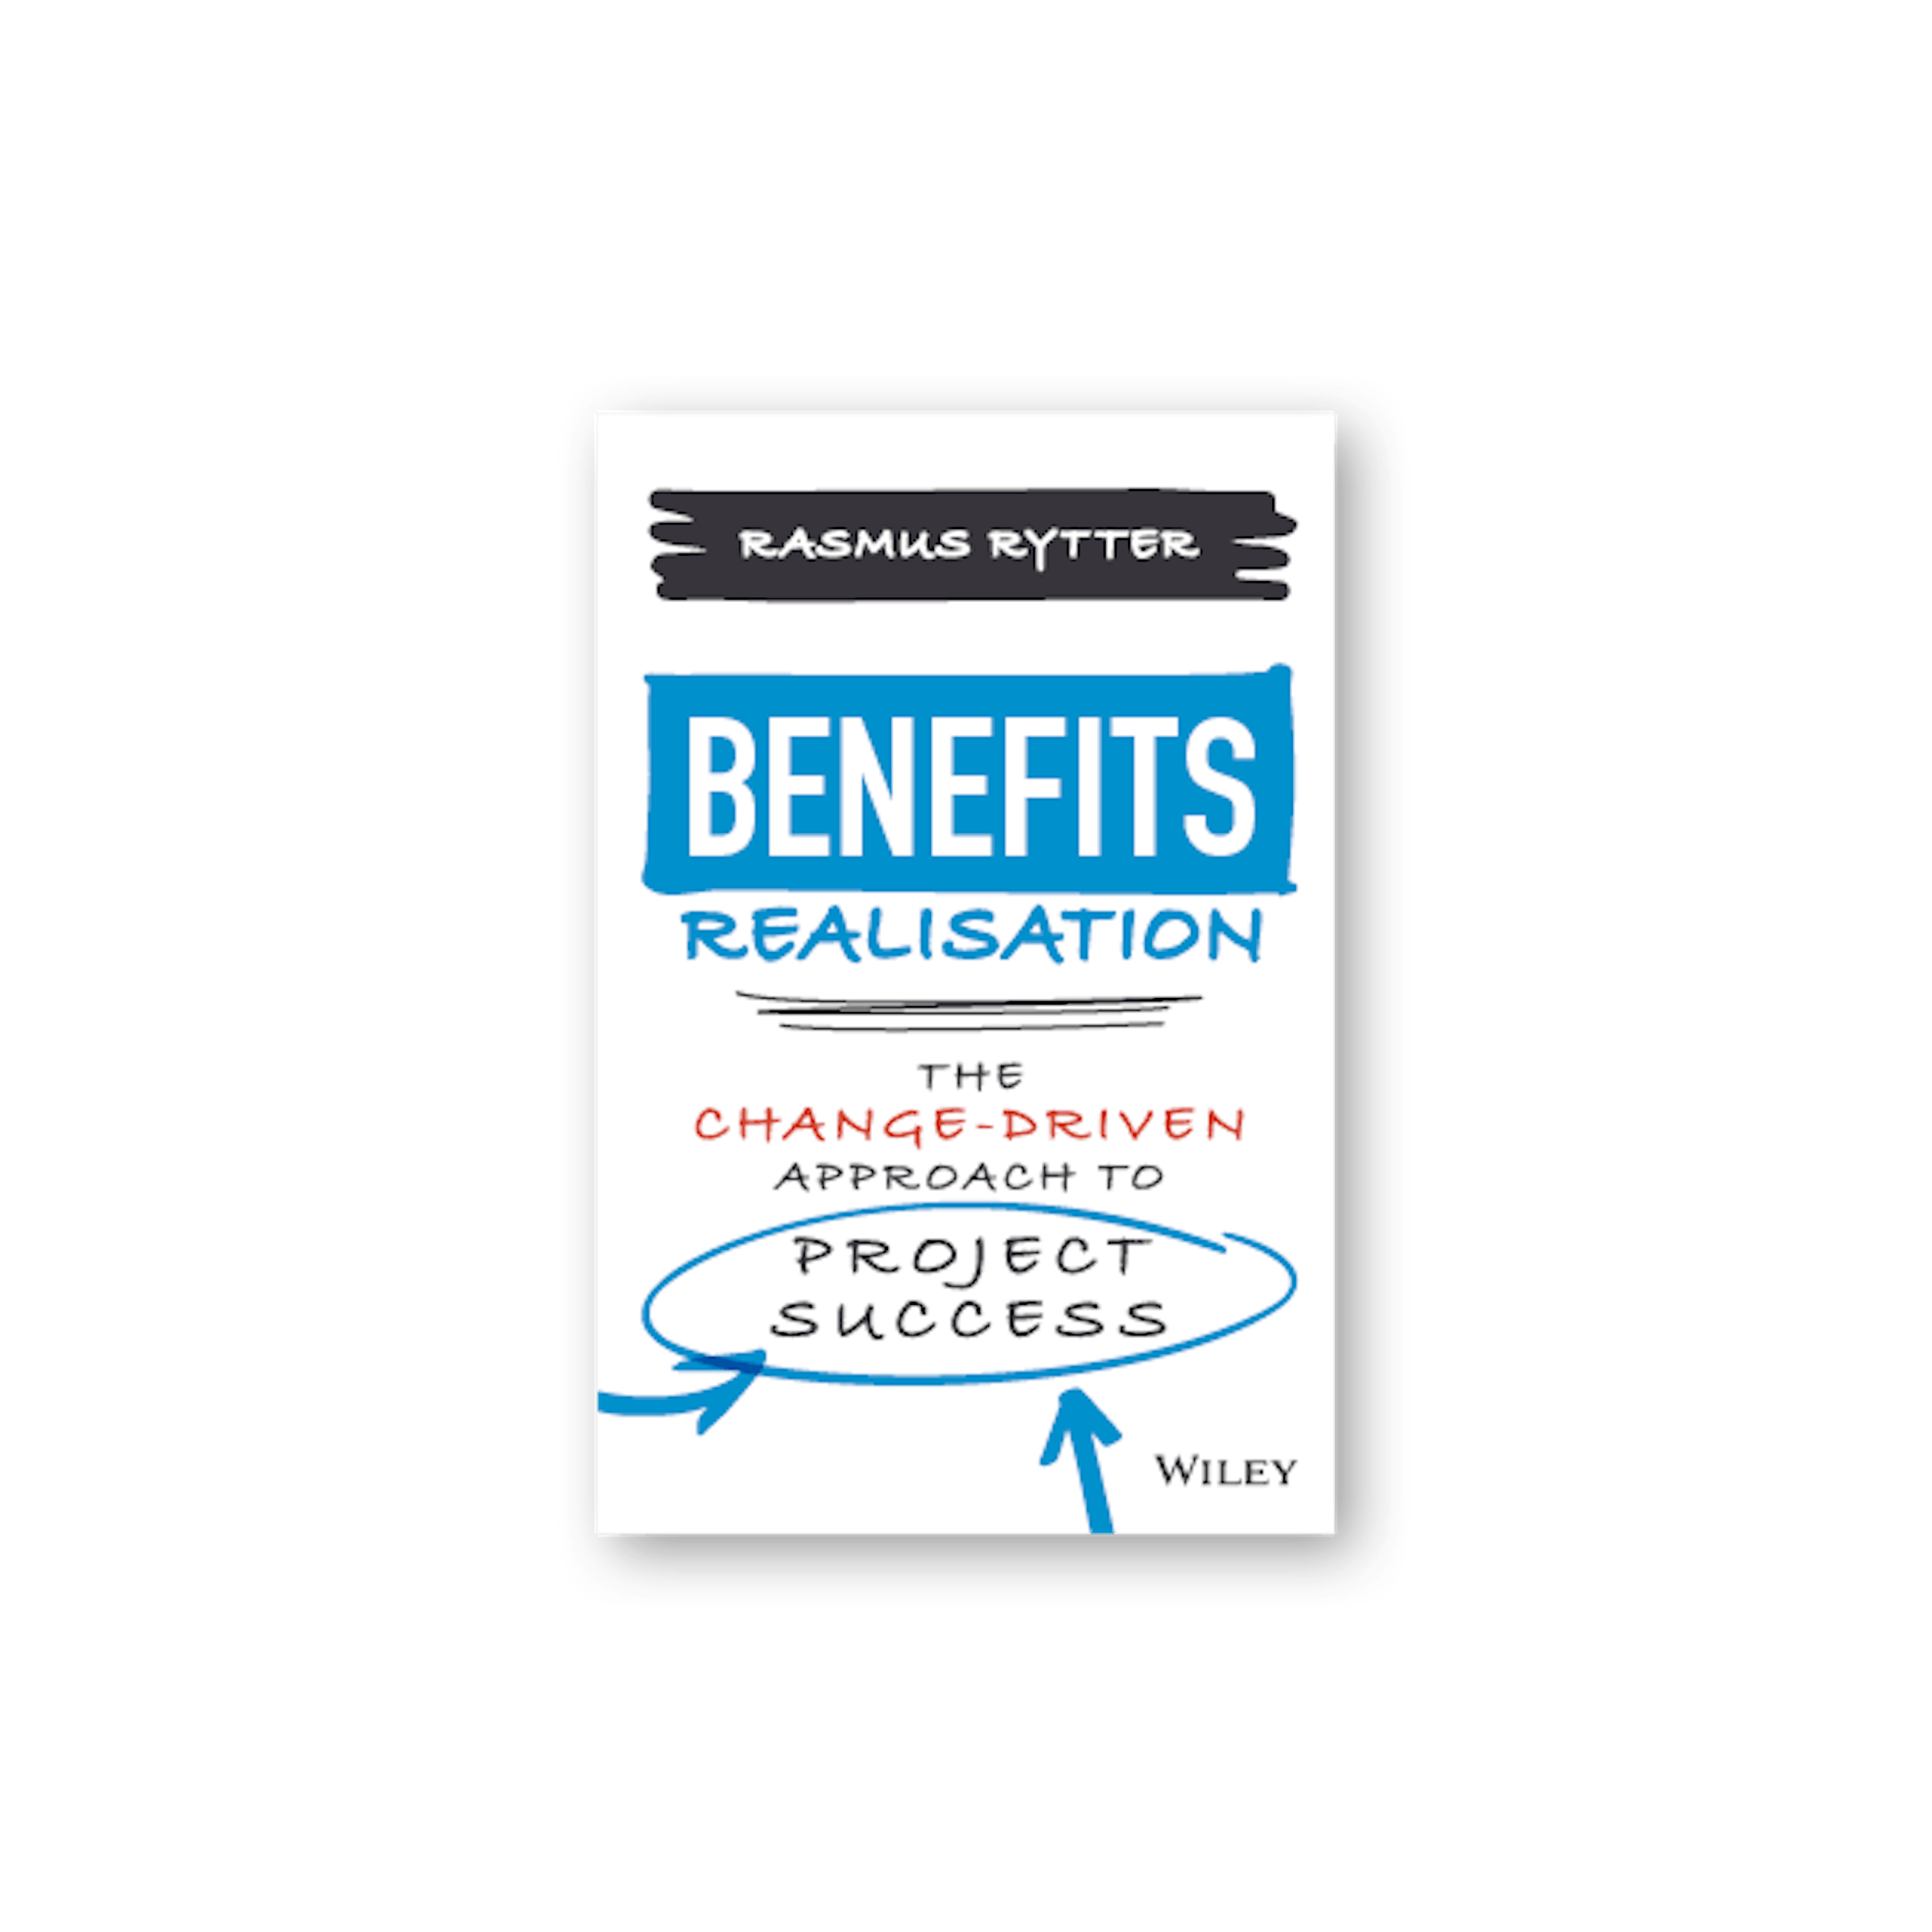 BOOK Benefits realisation 2